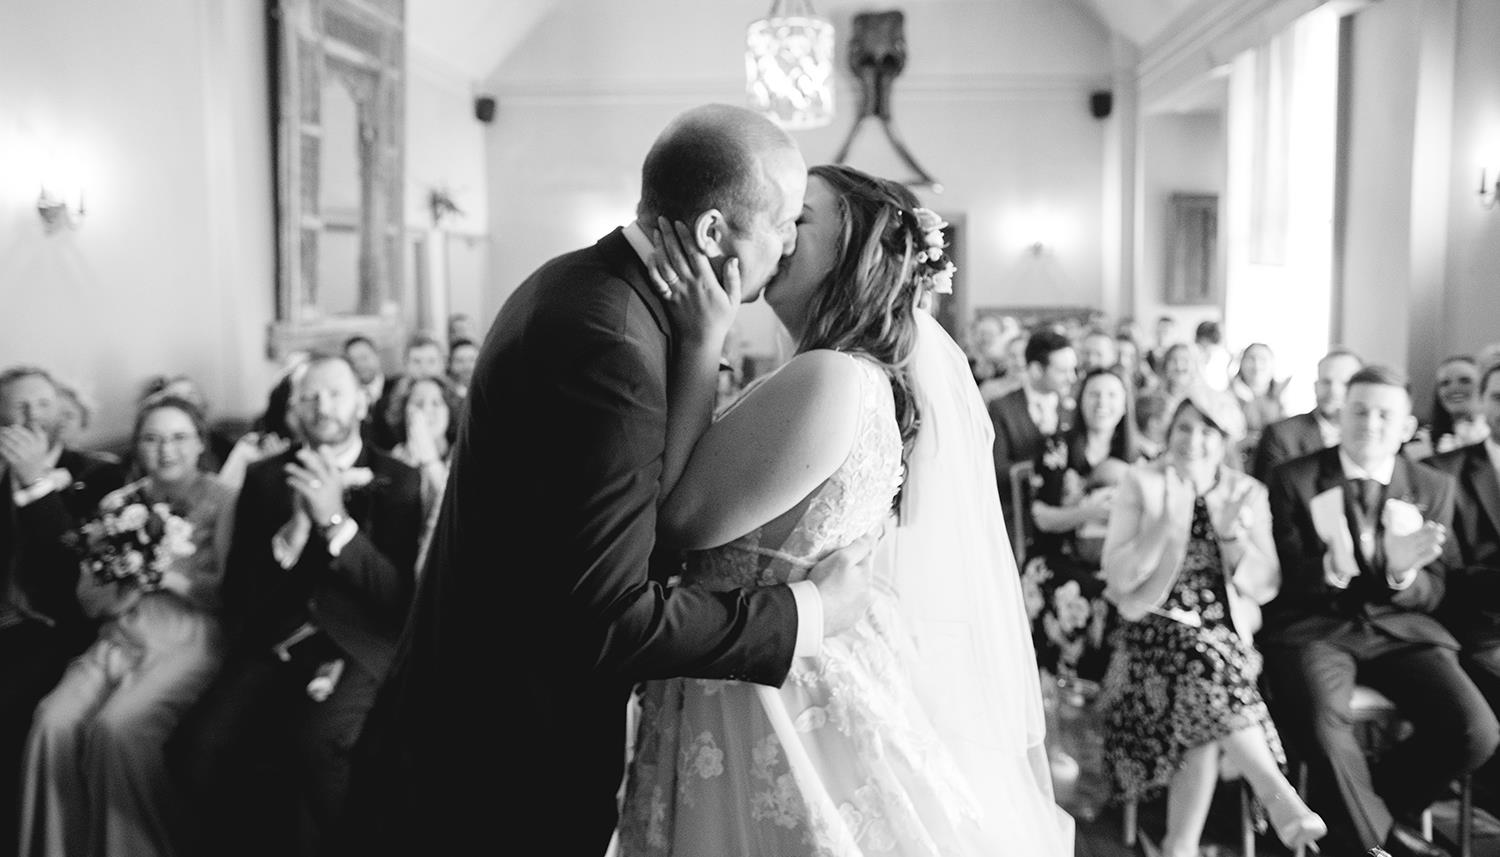 Kissing the bride. Photo Credit: Ilaria Petrucci Photography